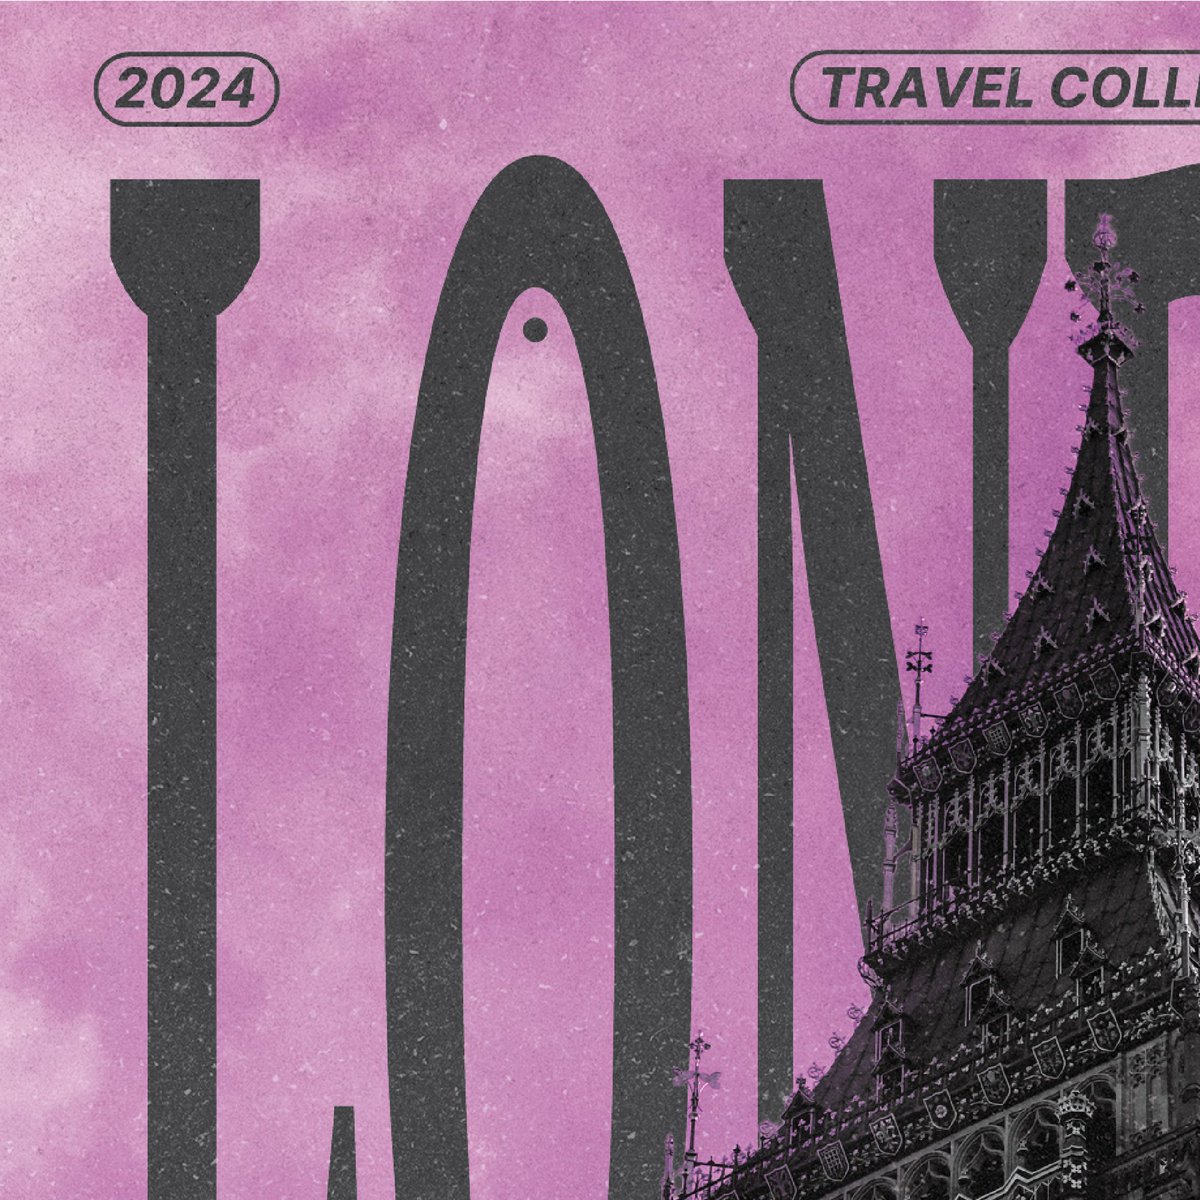 LONDON // 003 Continuing the 2024 Travel Collection with Big Ben in London. ____ Contact Me: josephlanddesign@gmail.com Portfolio: josephland.design #graphics #graphicdesign #travel #art #design #prints #printdesign